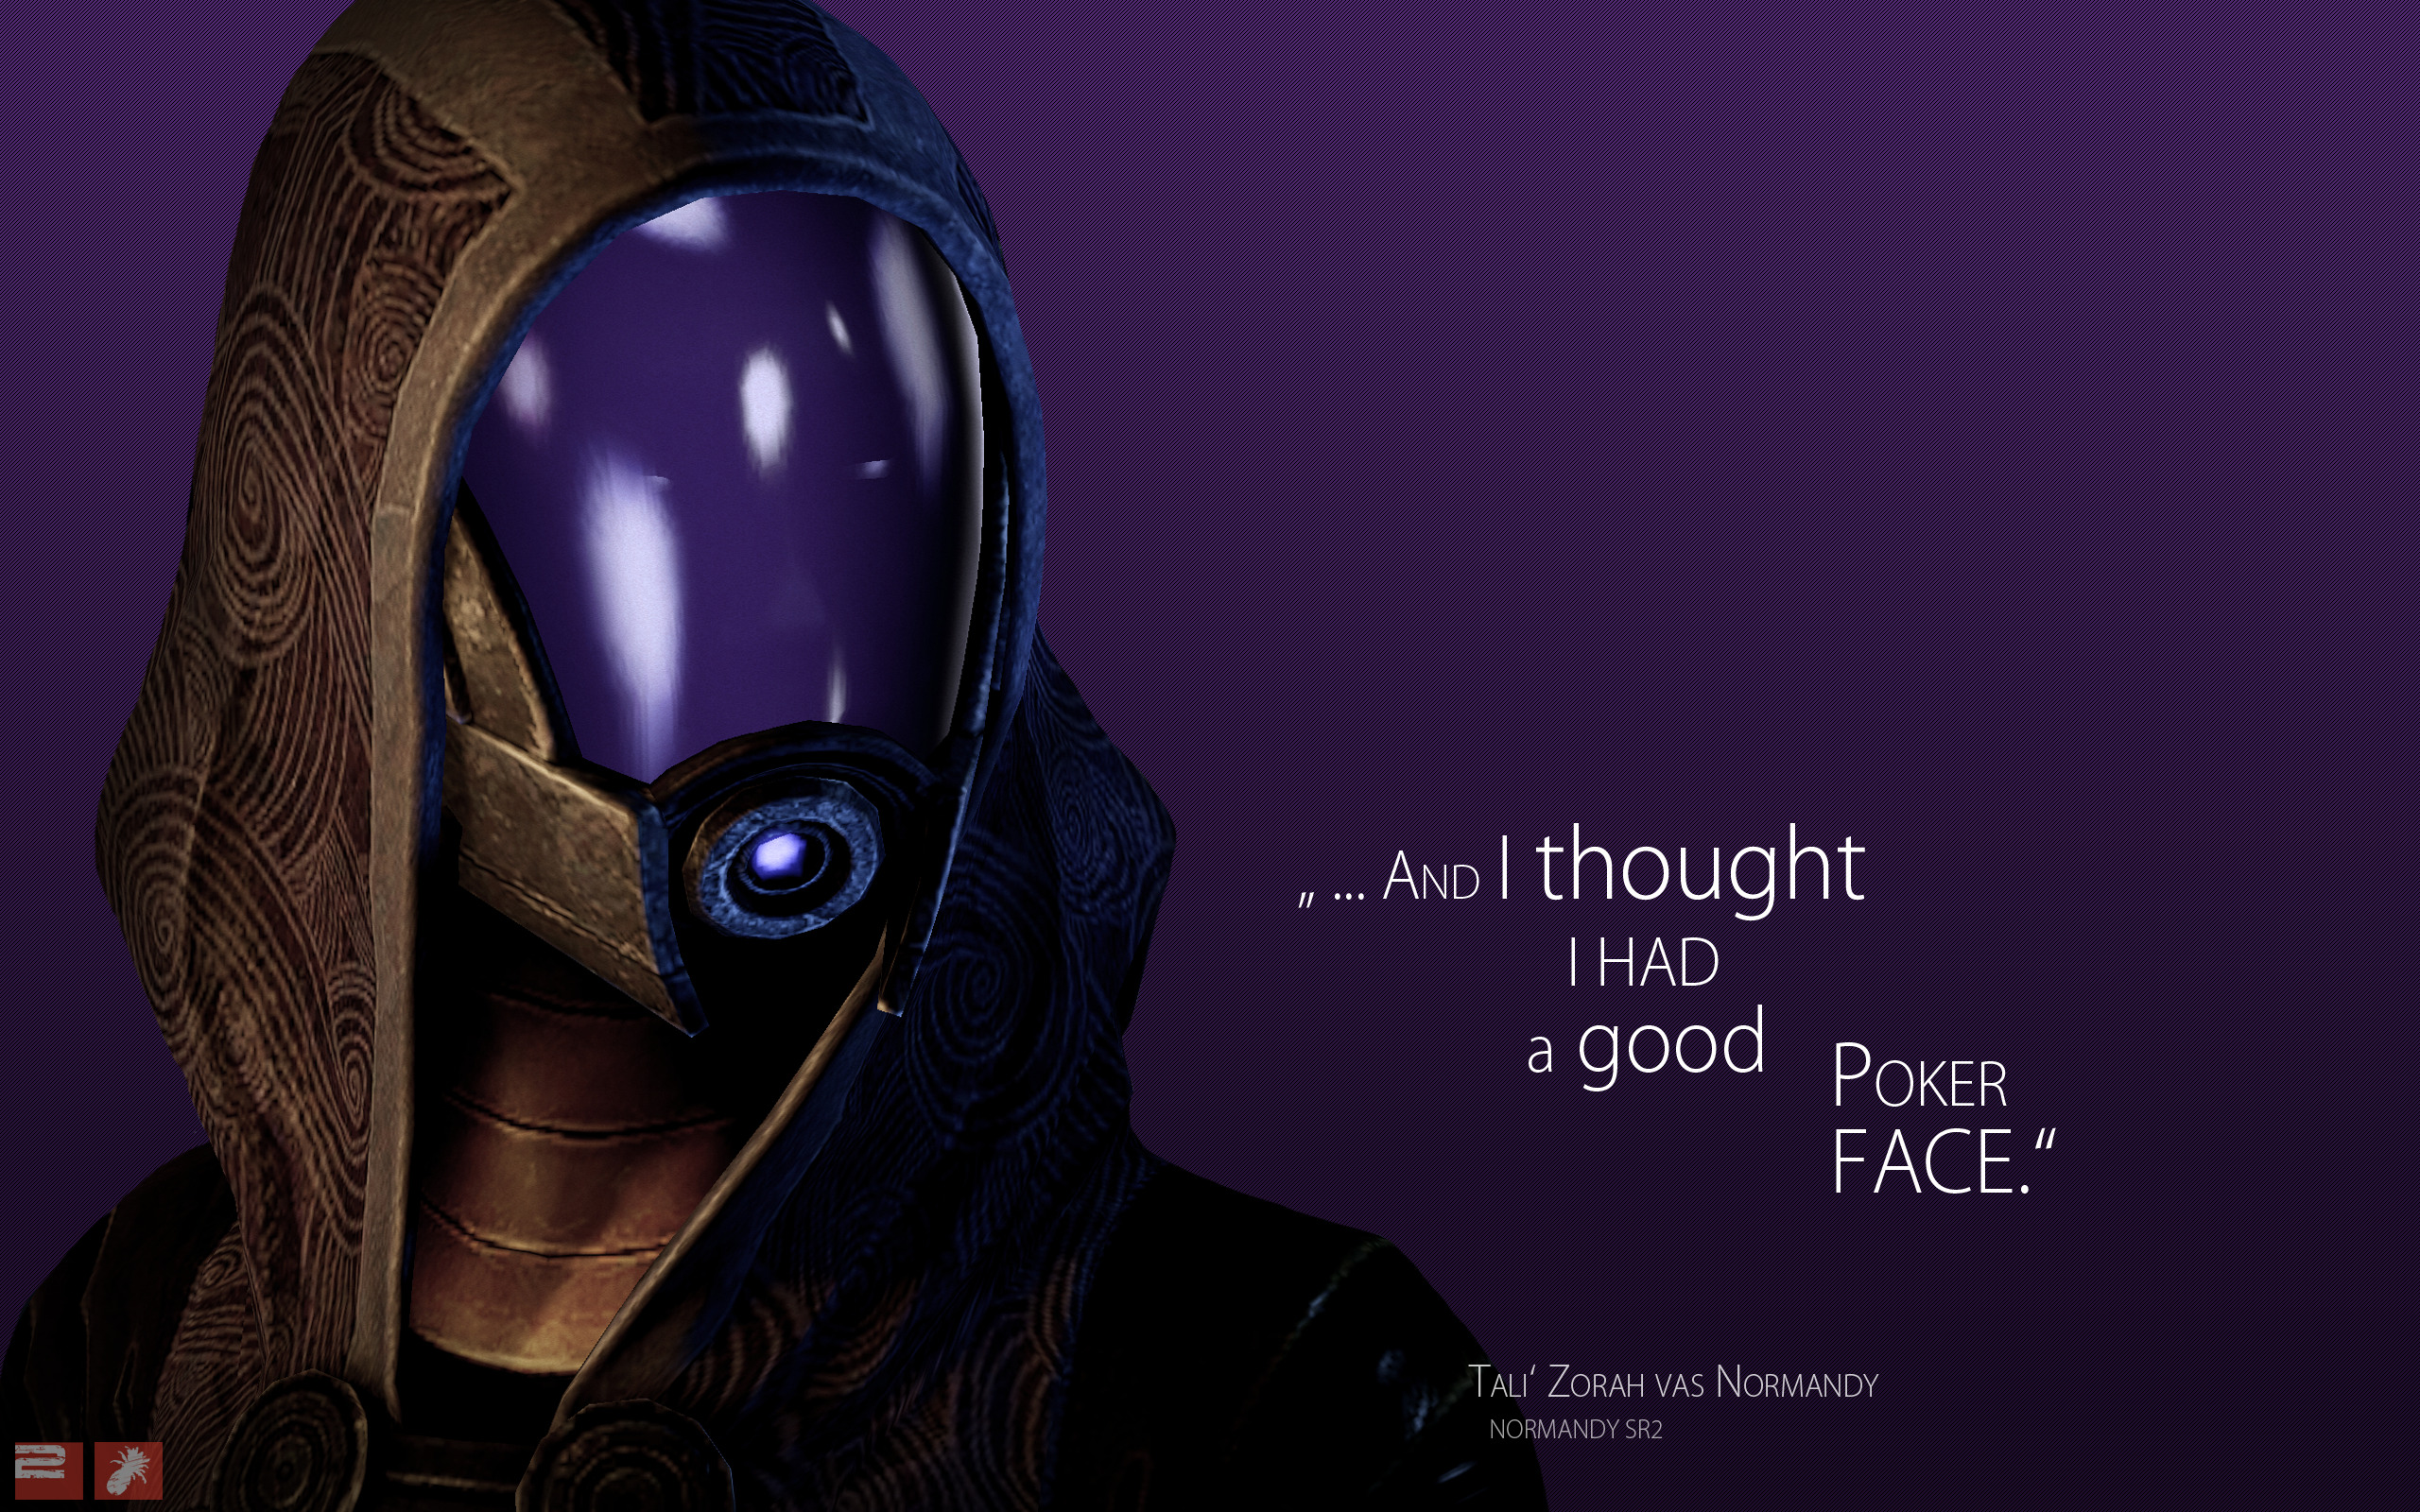 quotes, funny, Mass Effect, quarian, Tali Zorah nar Rayya - desktop wallpaper